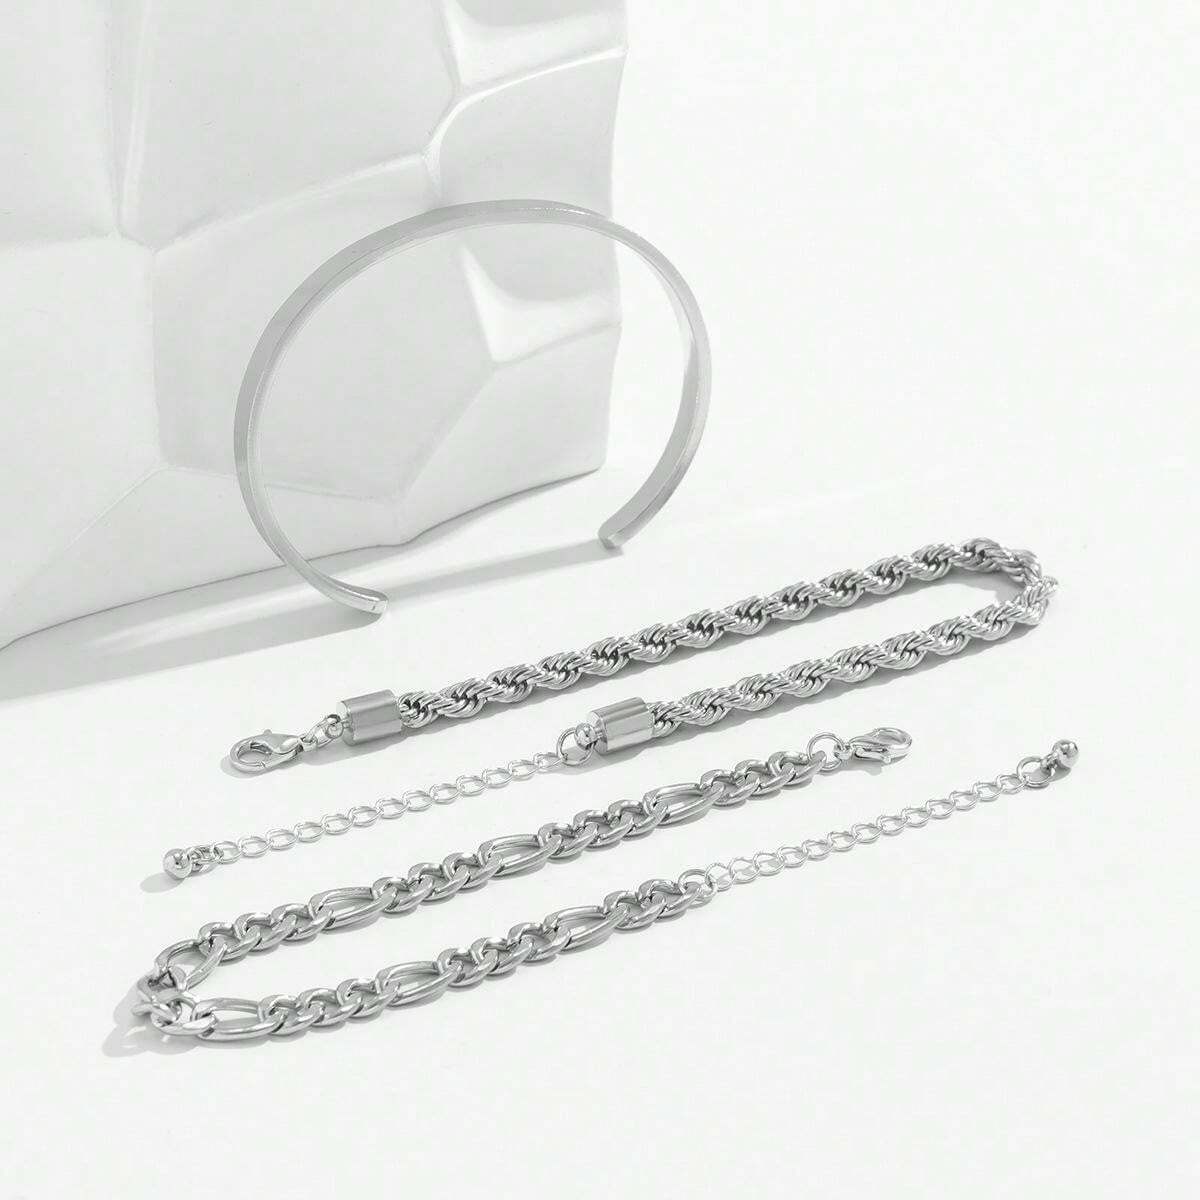 TRIFECTA SILVER - 3 pcs Alloy Adjustable Bracelet for Men & Boys